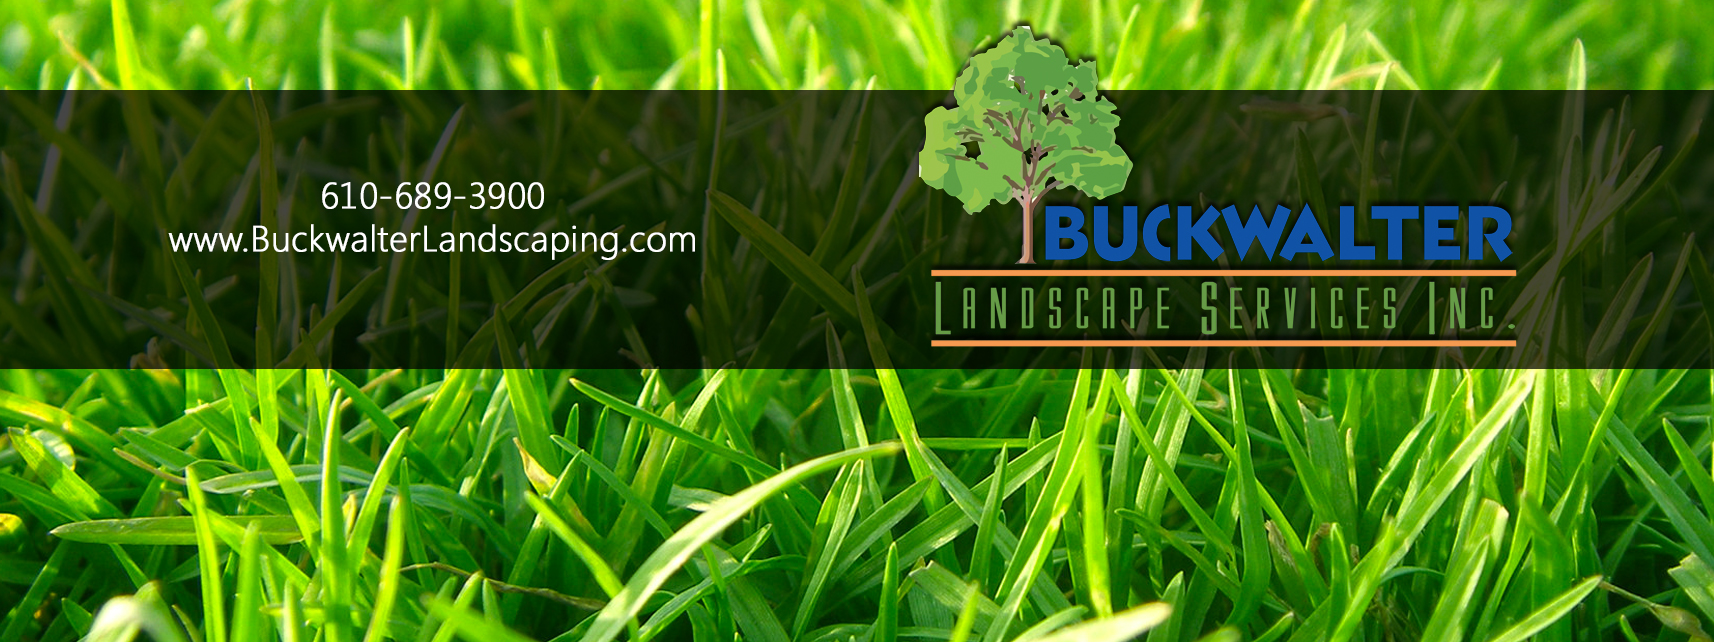 Buckwalter Landscape Services, Inc.